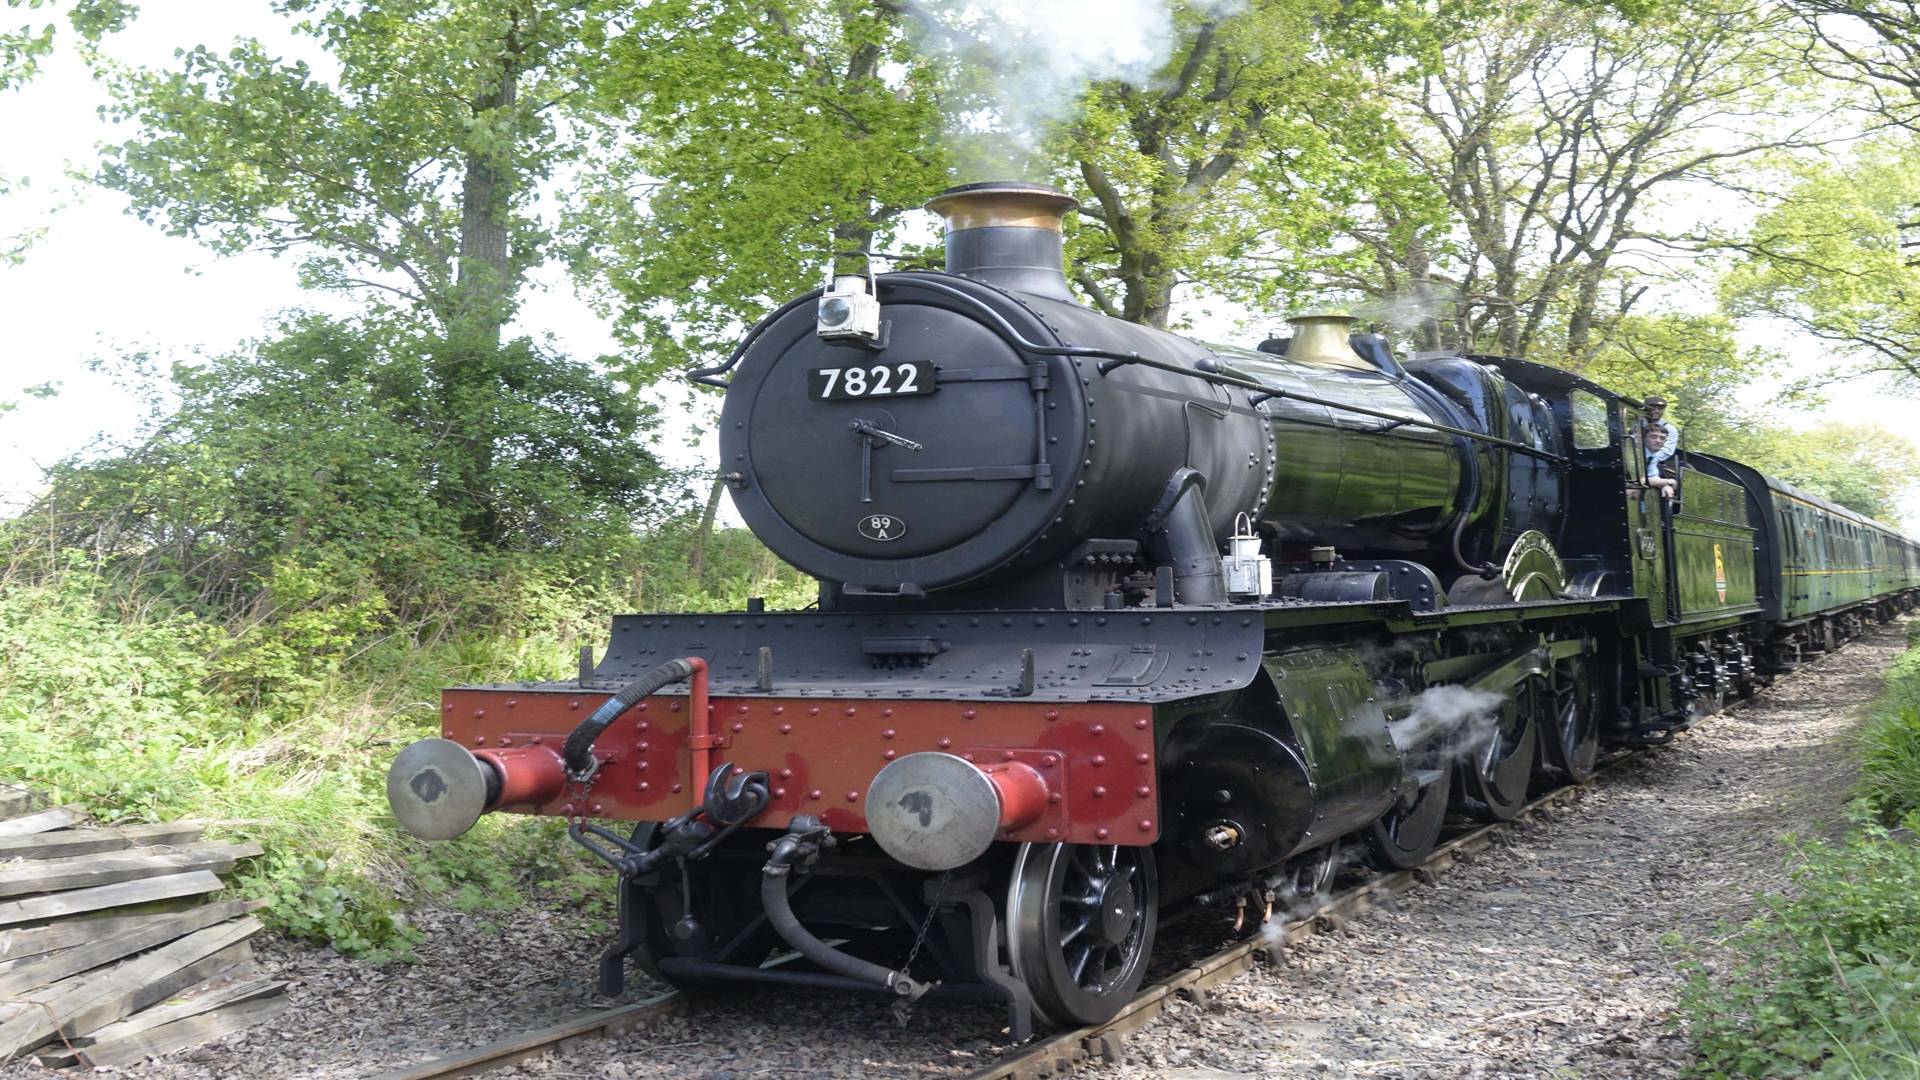 On loan steam train graces Tenterden's Kent & East Sussex Railway line